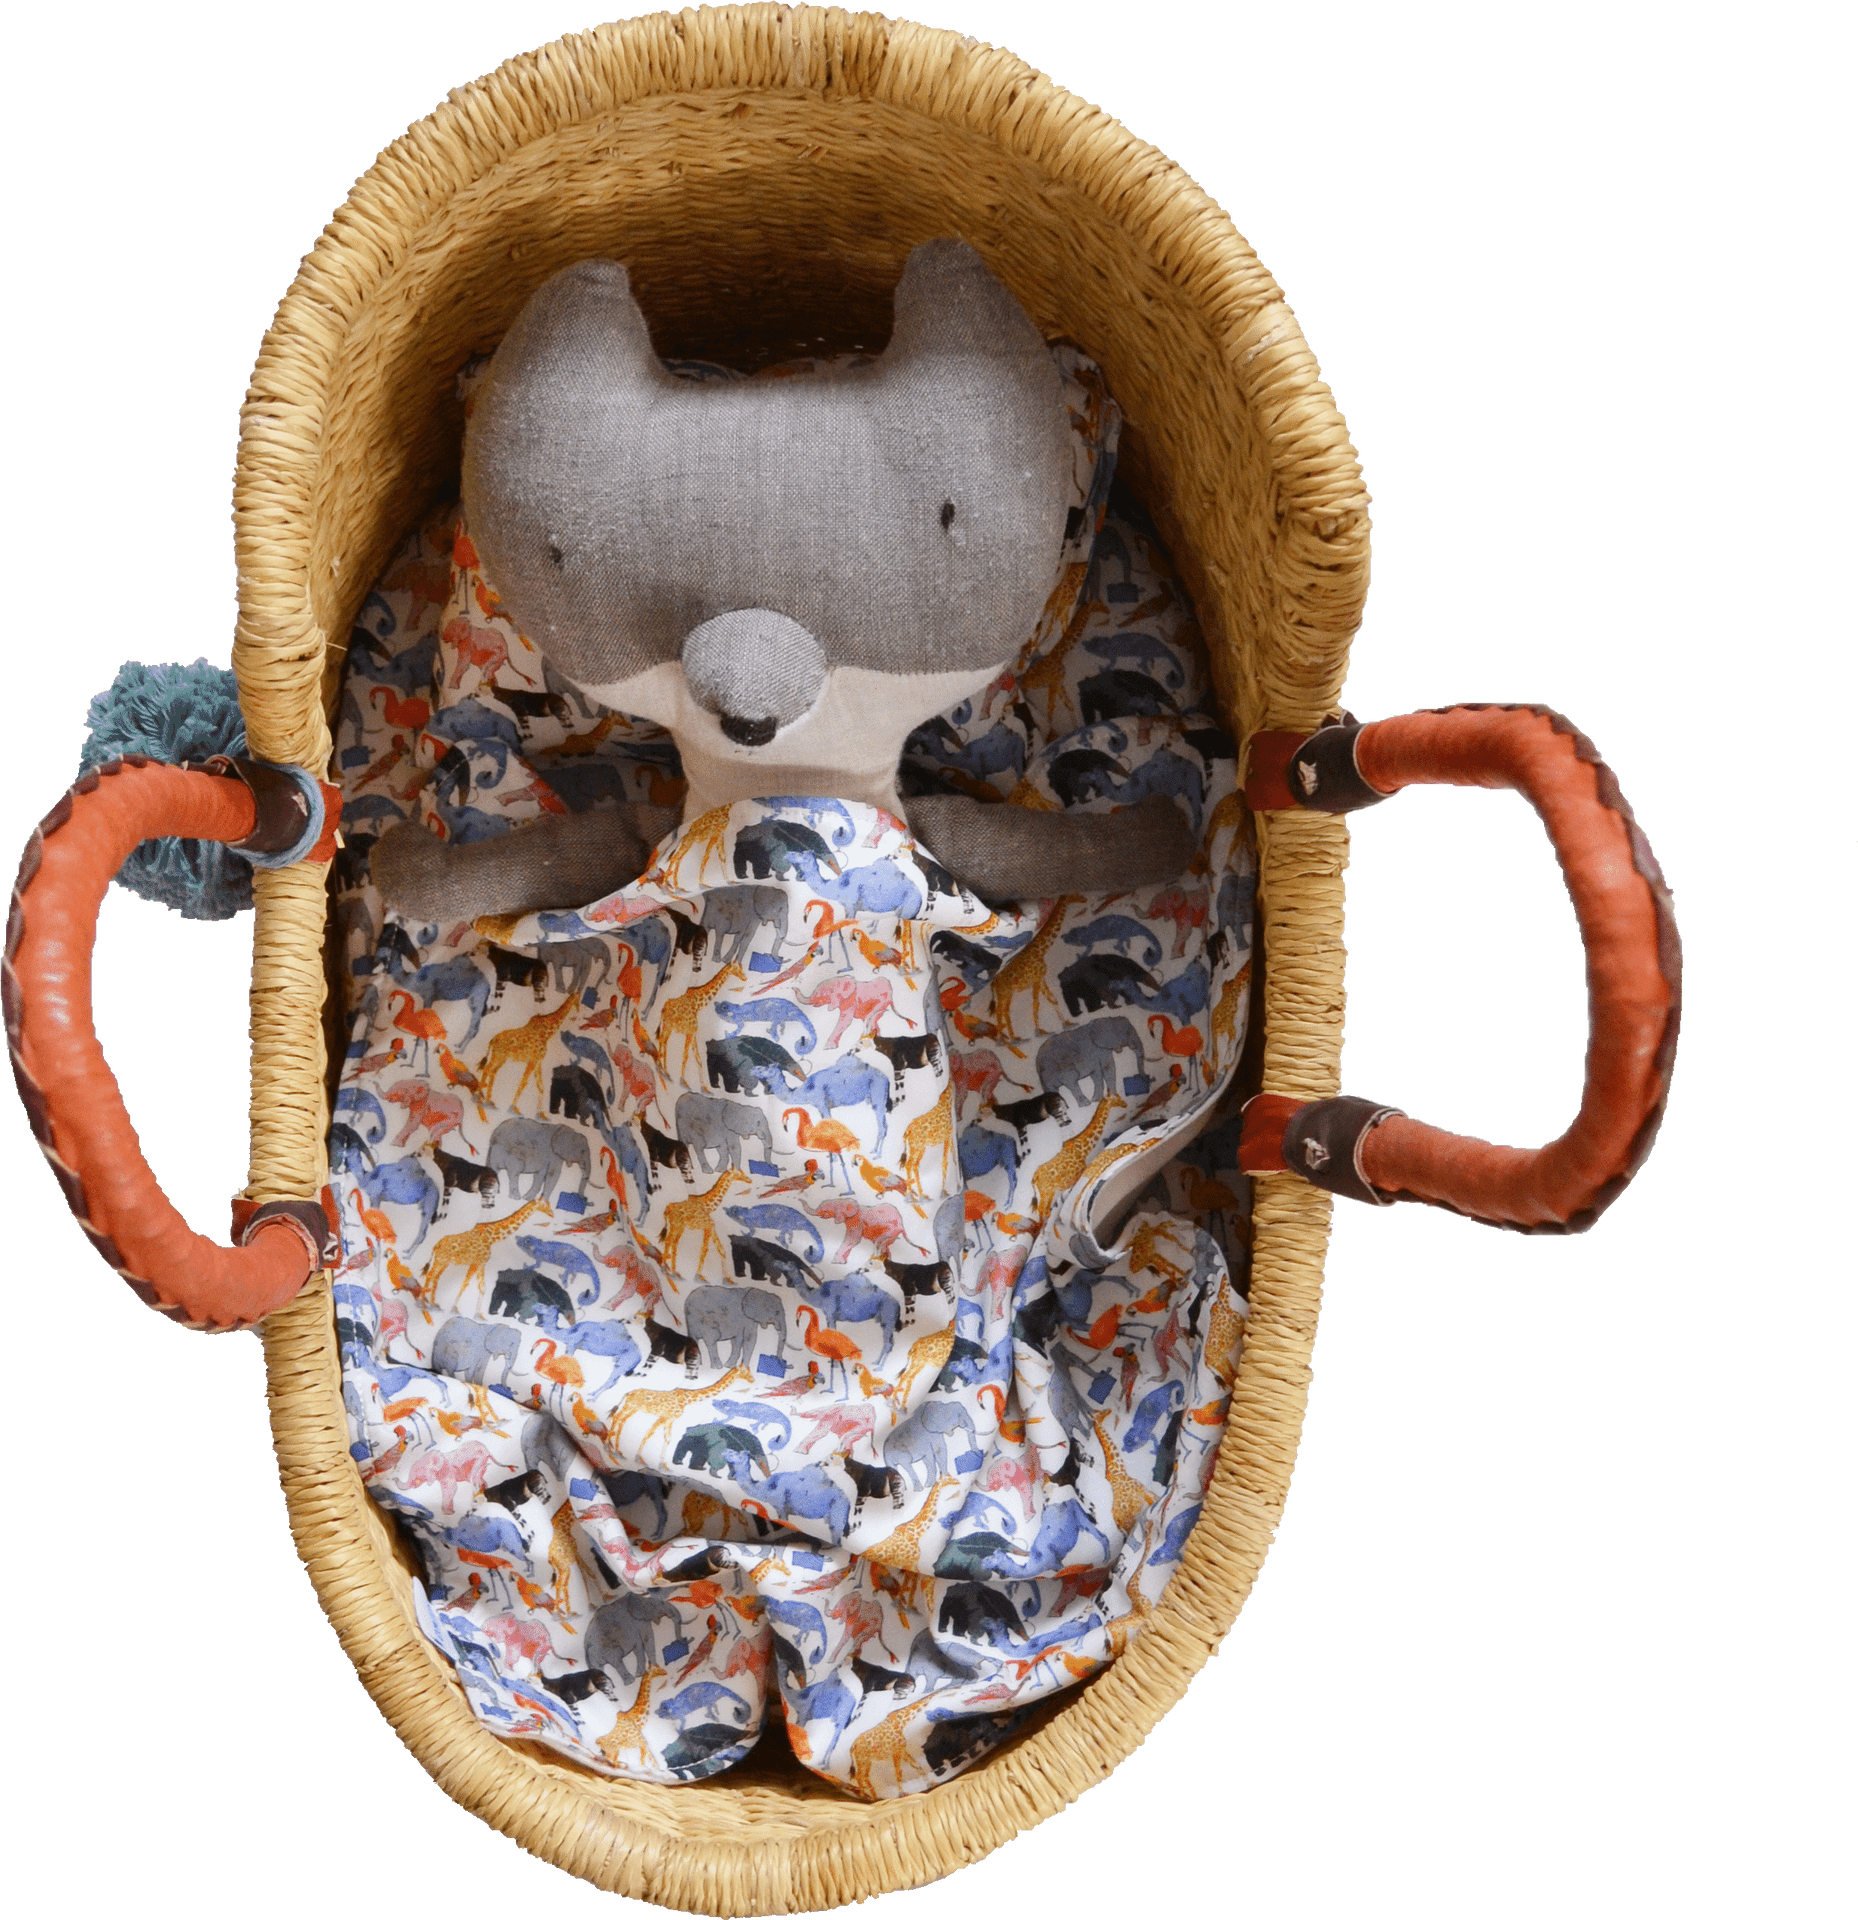 Stuffed Animalin Wicker Basket PNG image